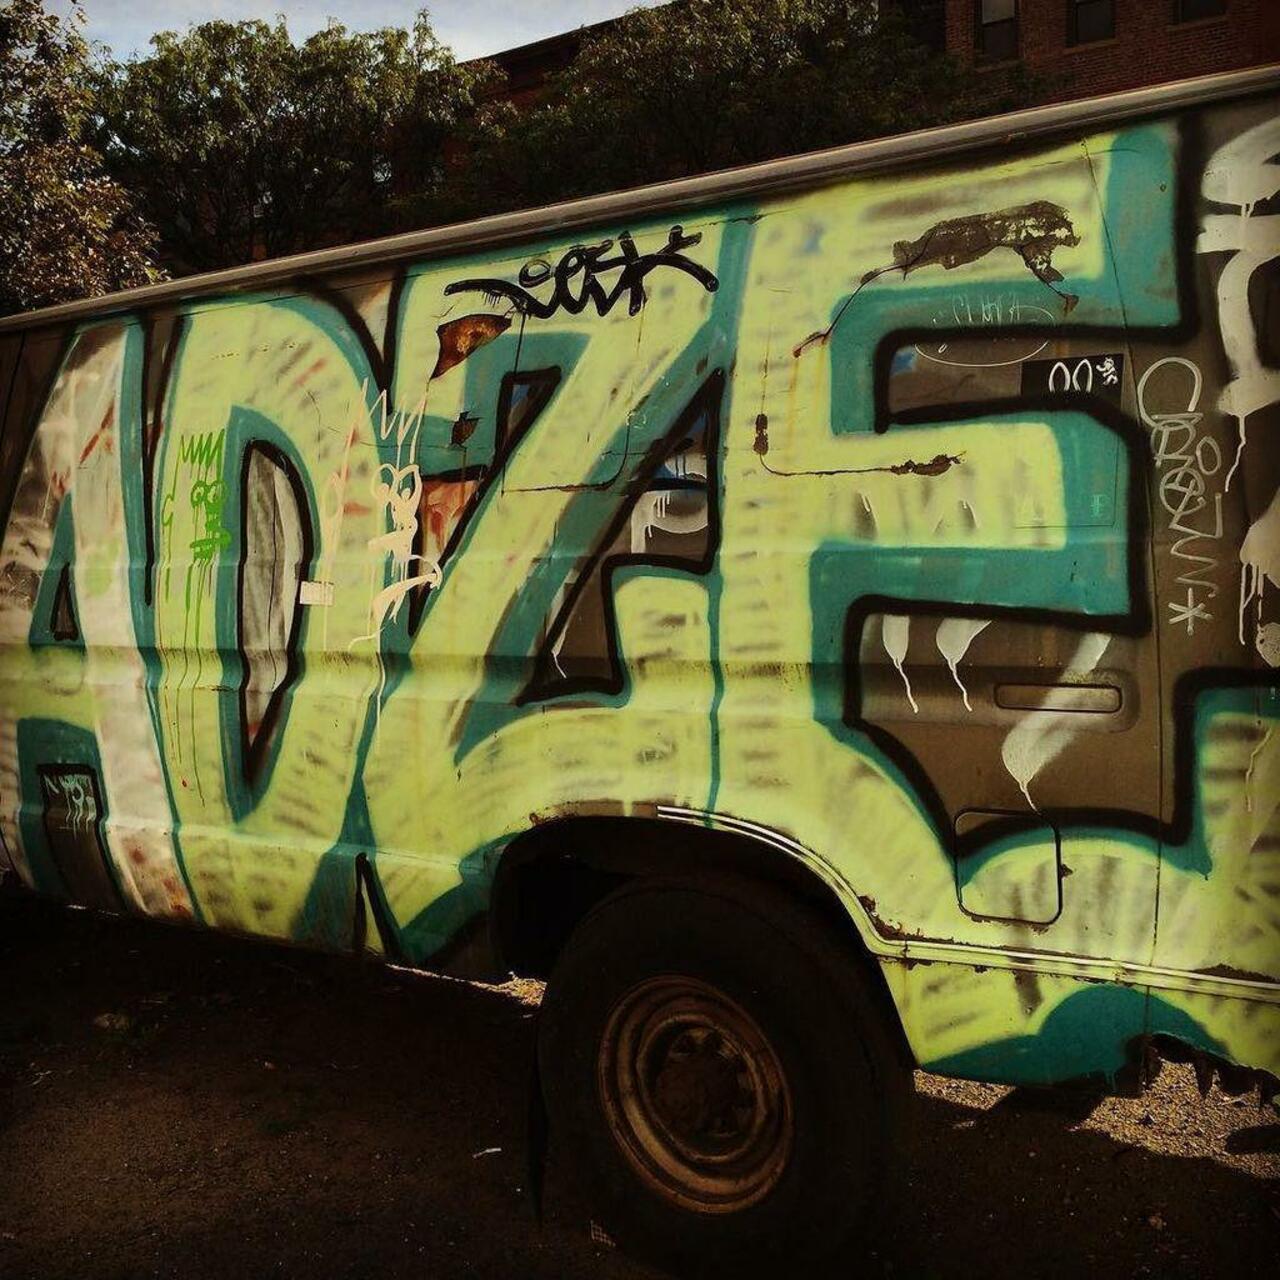 #nycgraffititruck #nyctags #nycgraffiti #nycstreetart #nycgraffart #graffiti #graffitiwalls #tags #streetart #stree… http://t.co/6pXSHkYfgZ